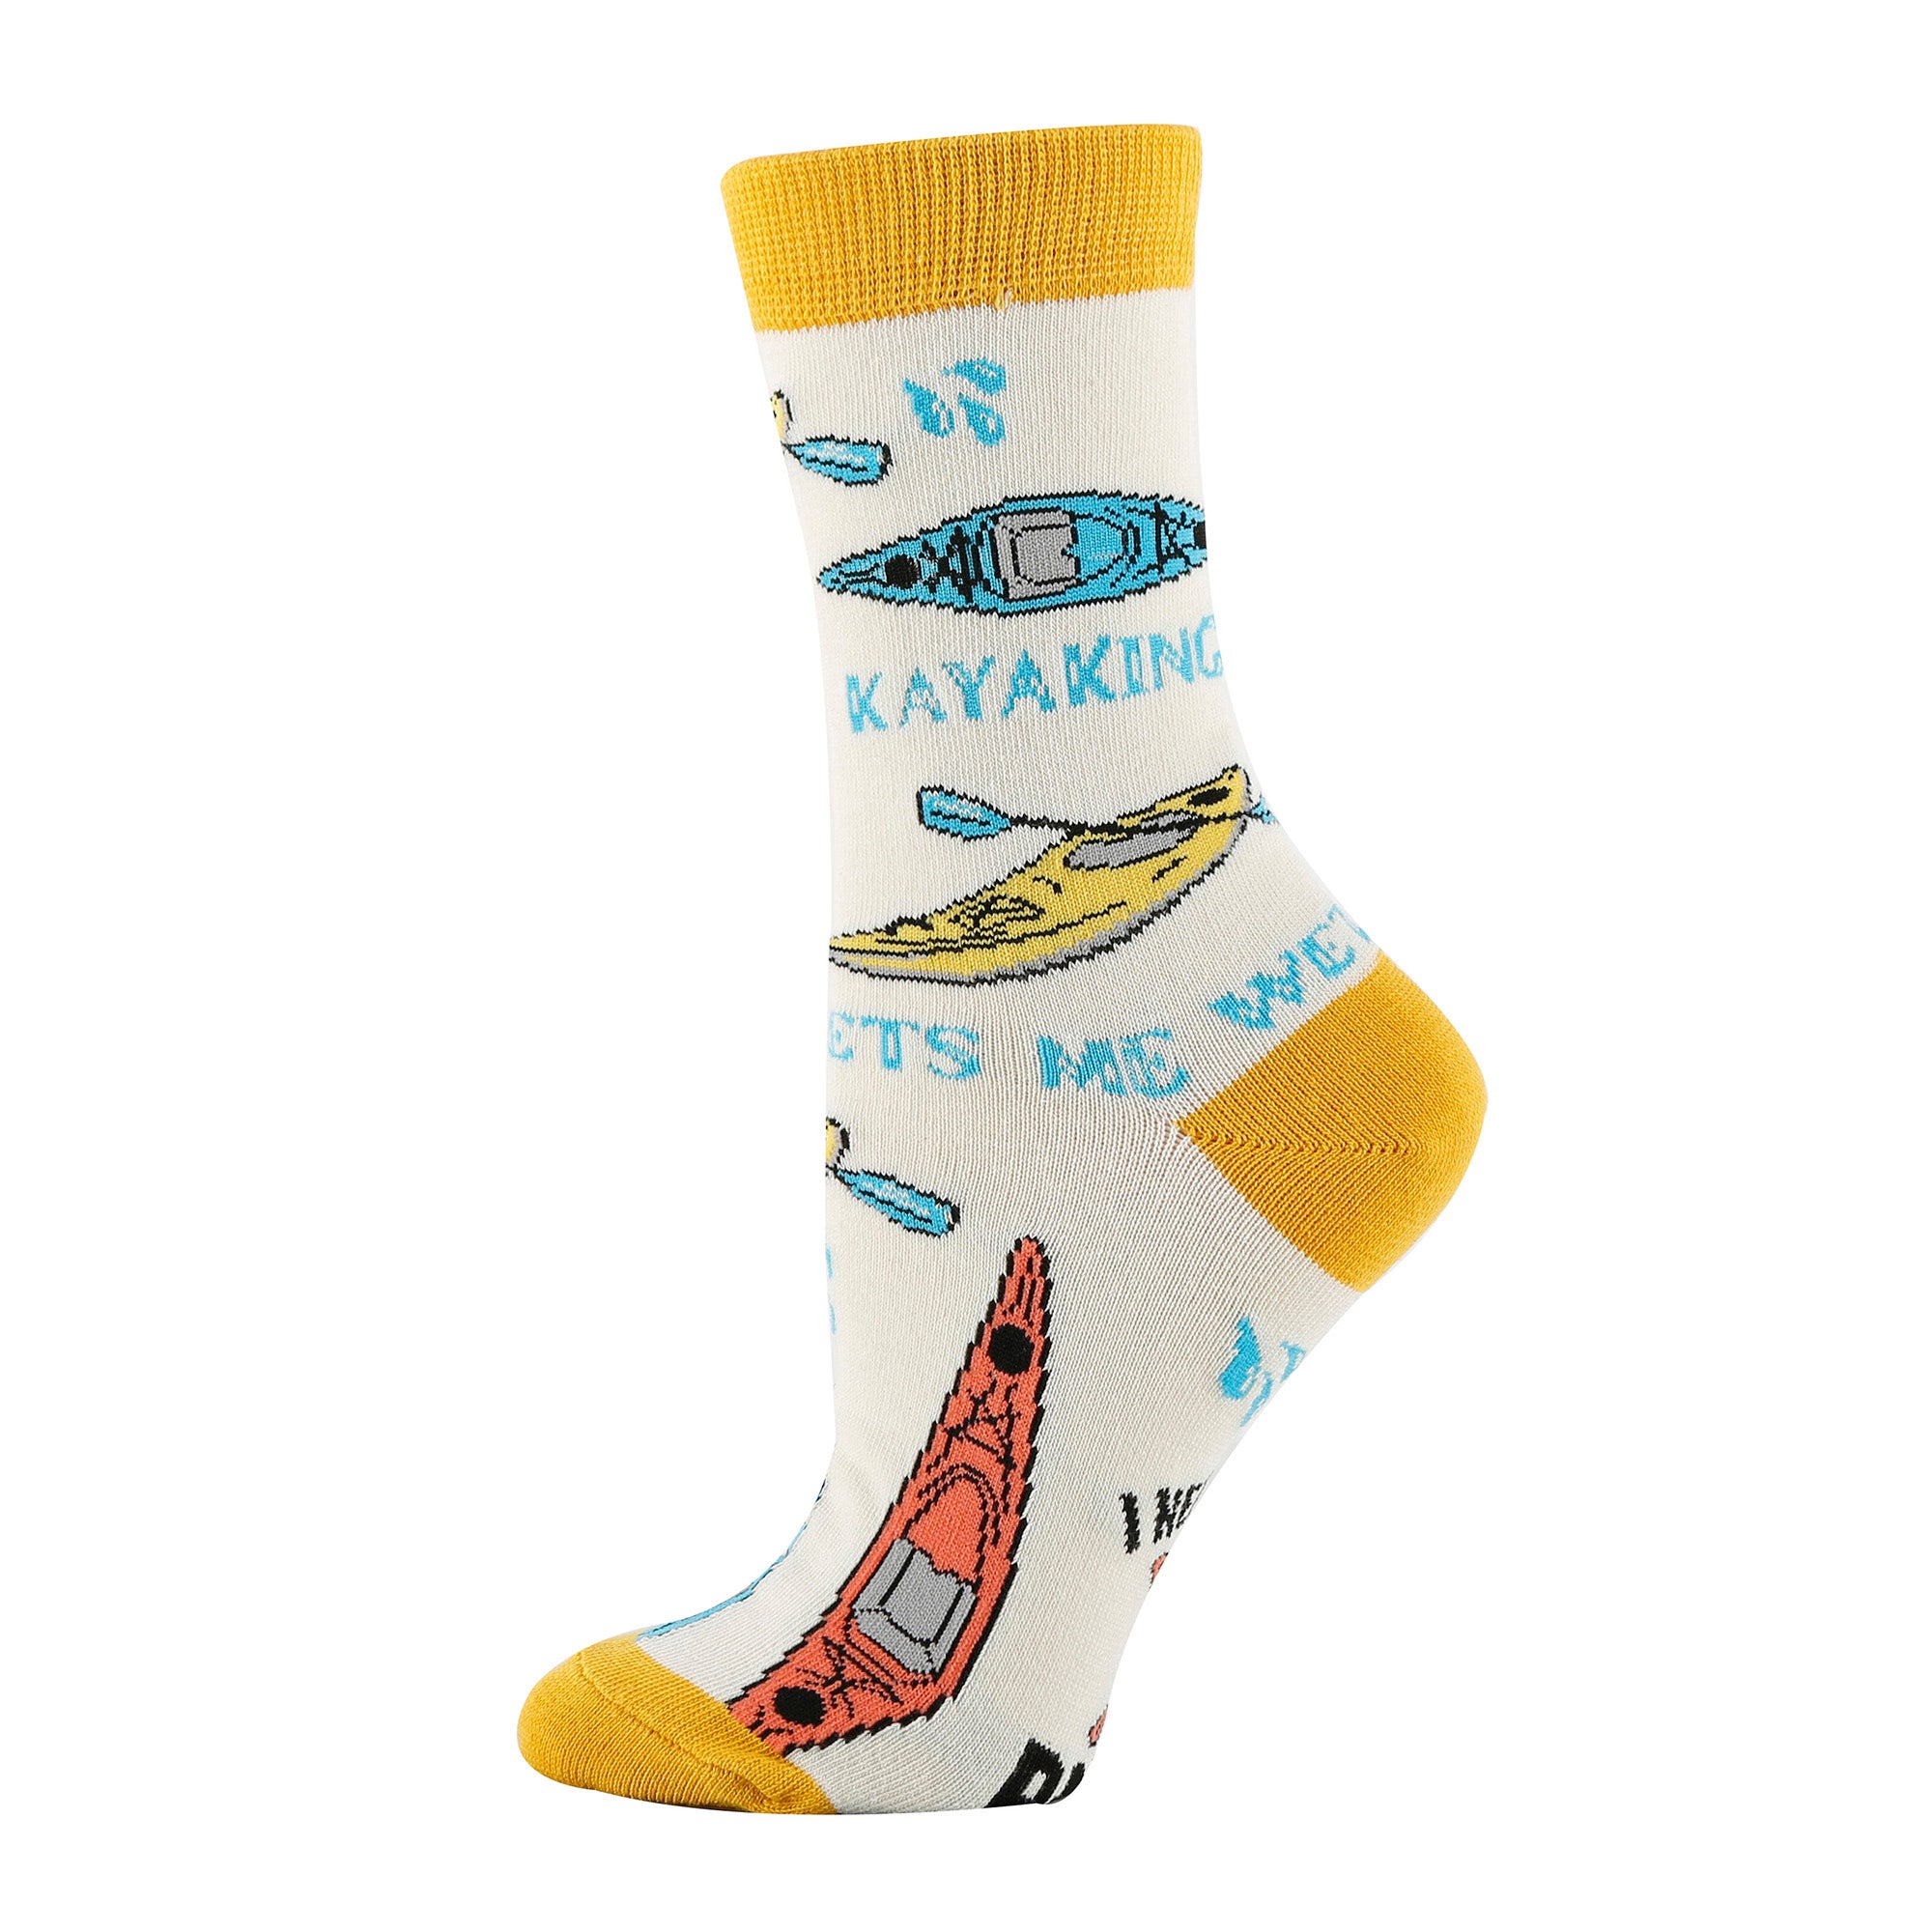 Kayak obtiene calcetines